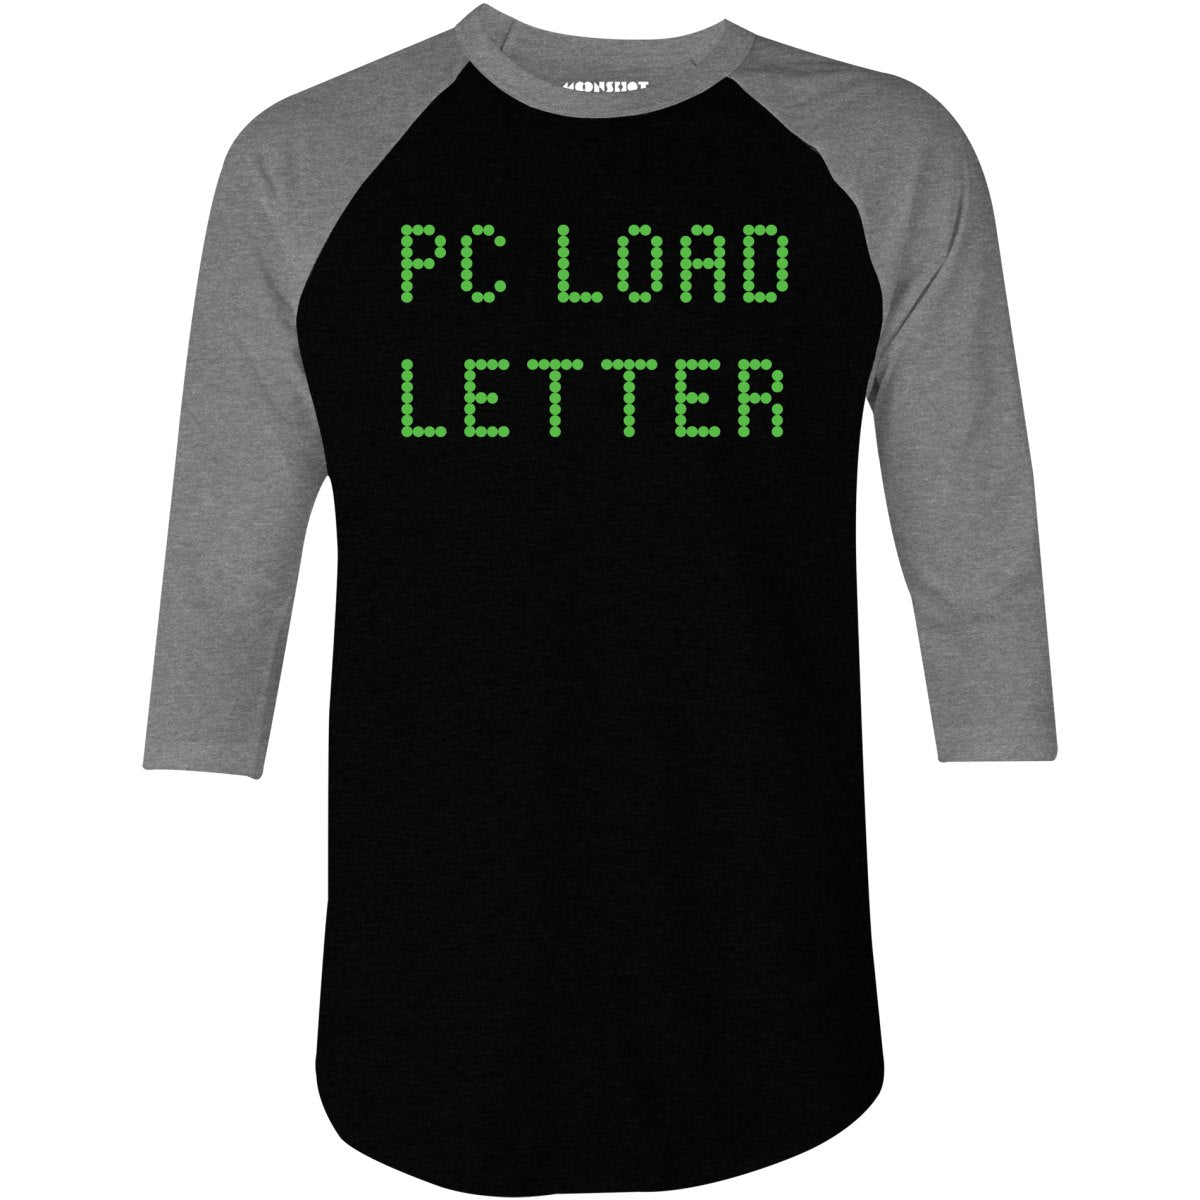 PC Load Letter - 3/4 Sleeve Raglan T-Shirt